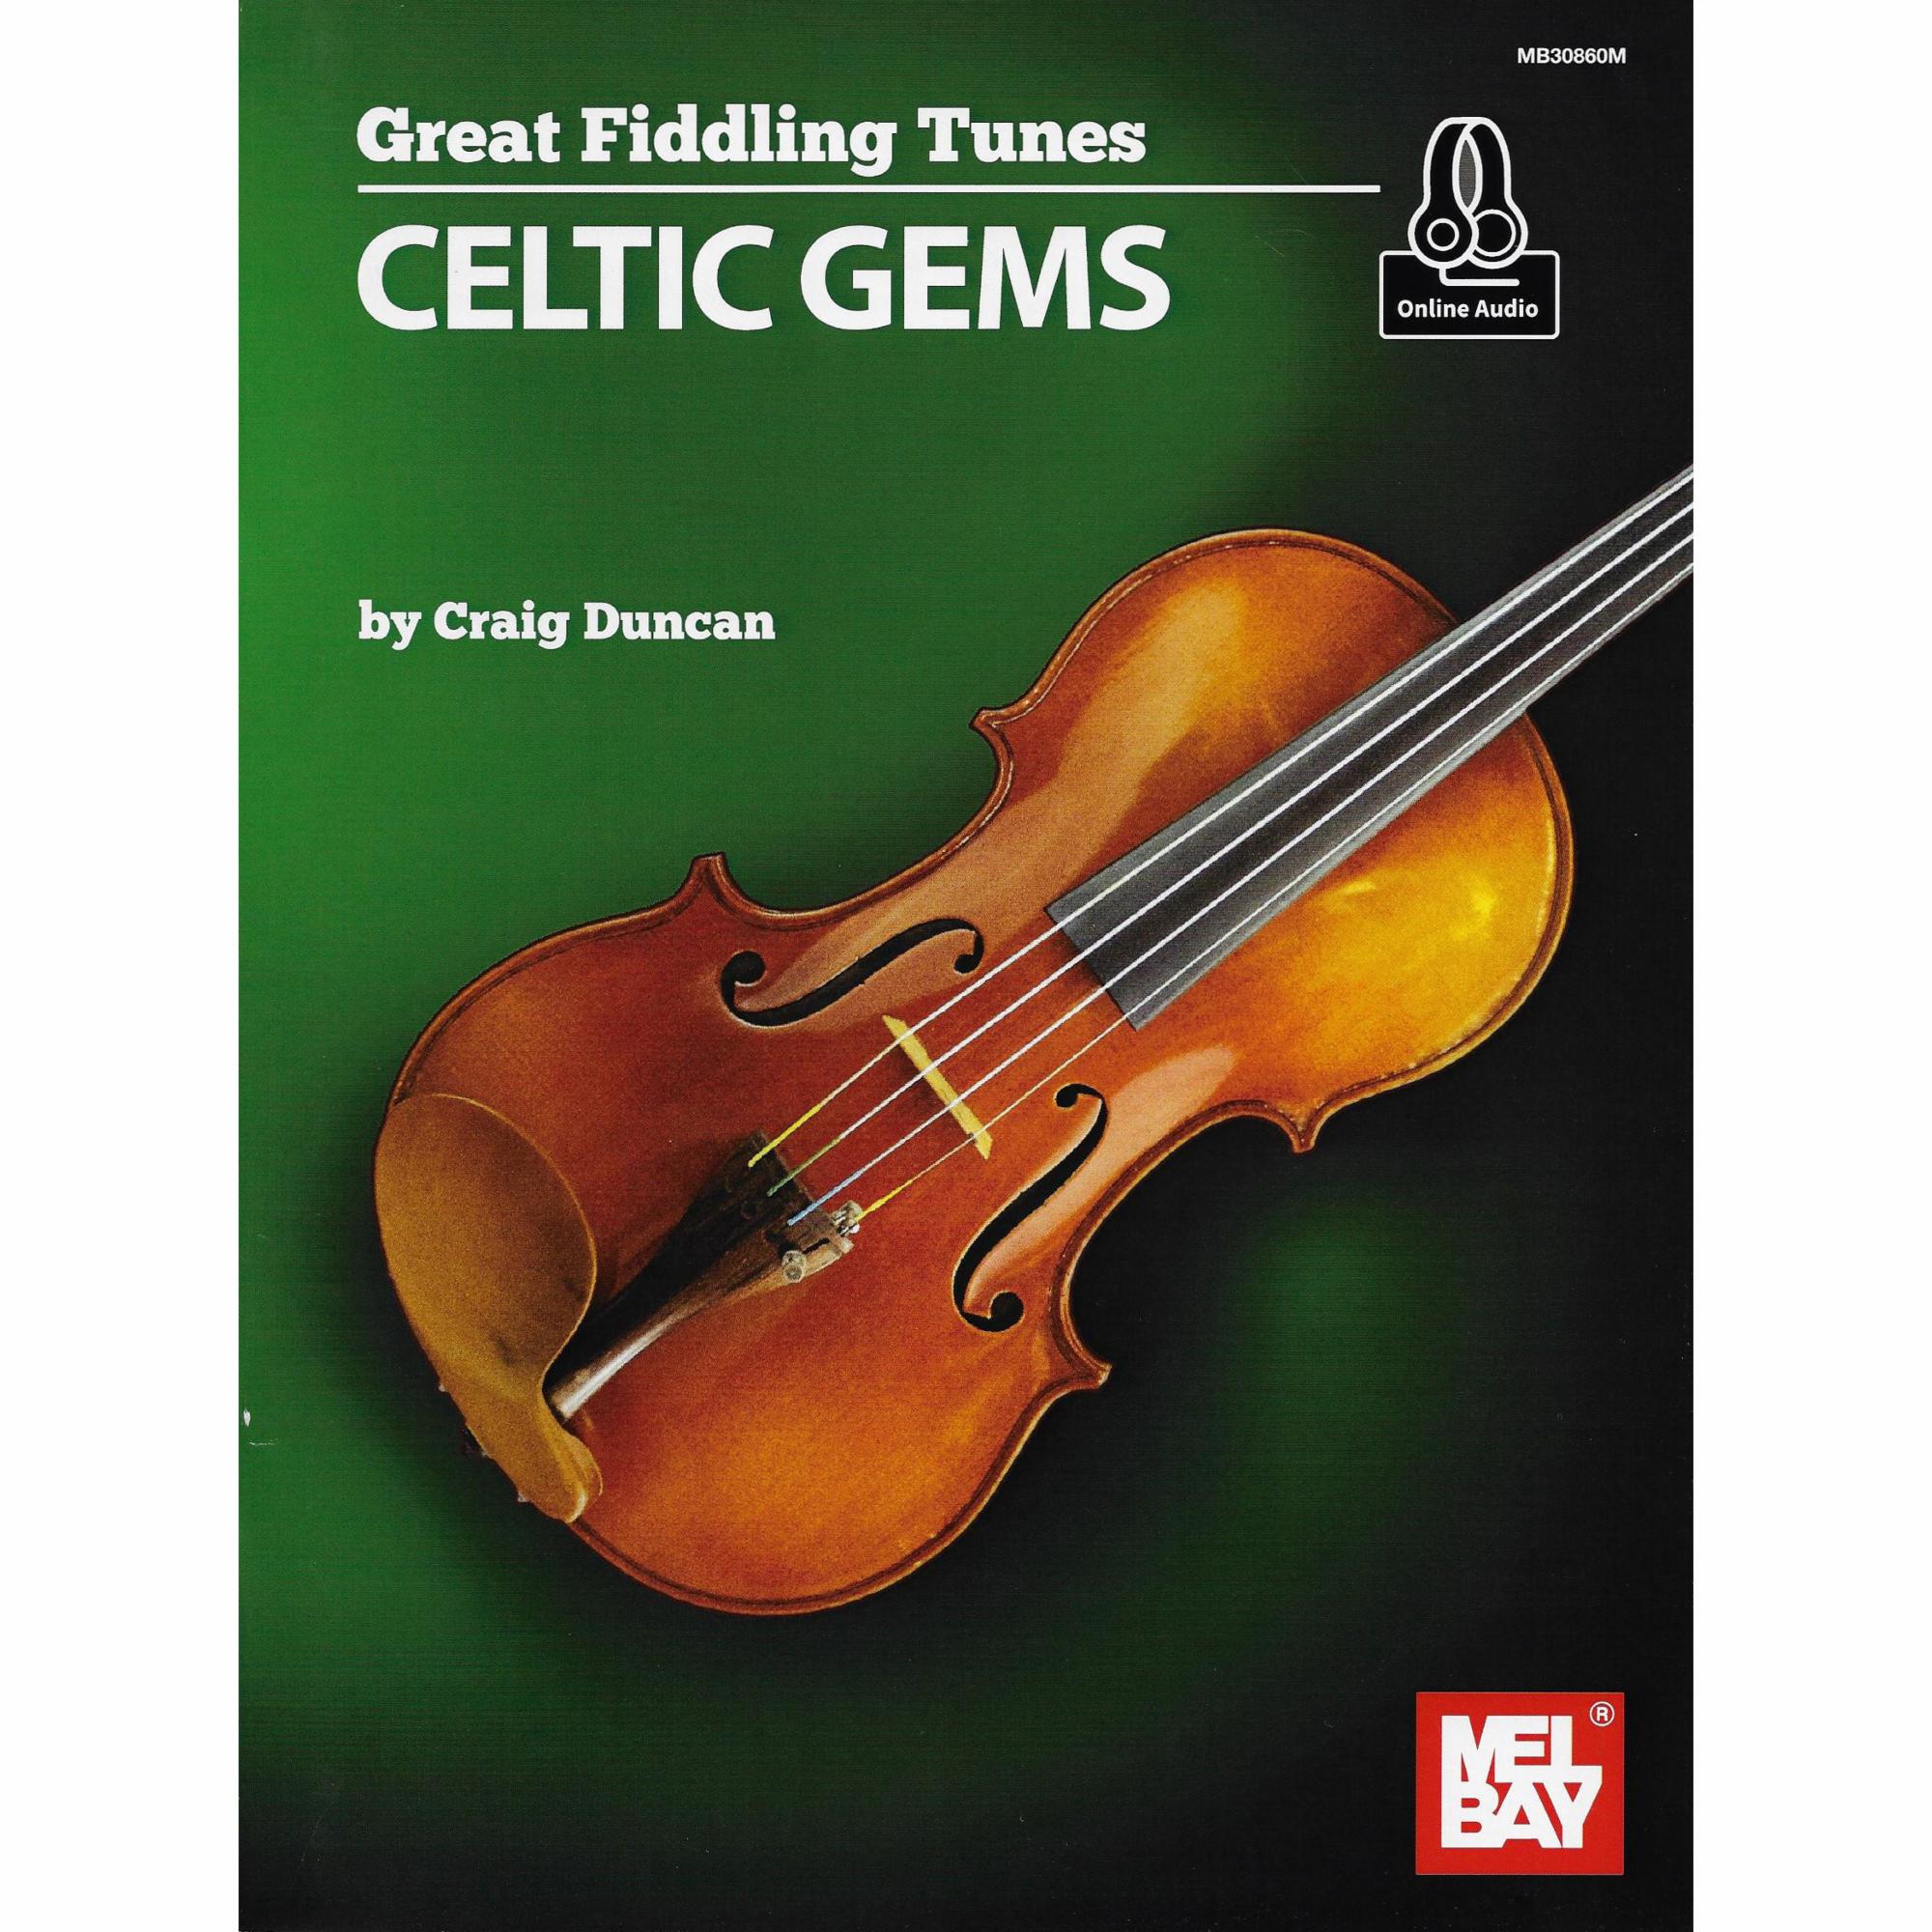 Great Fiddling Tunes: Celtic Gems for Violin